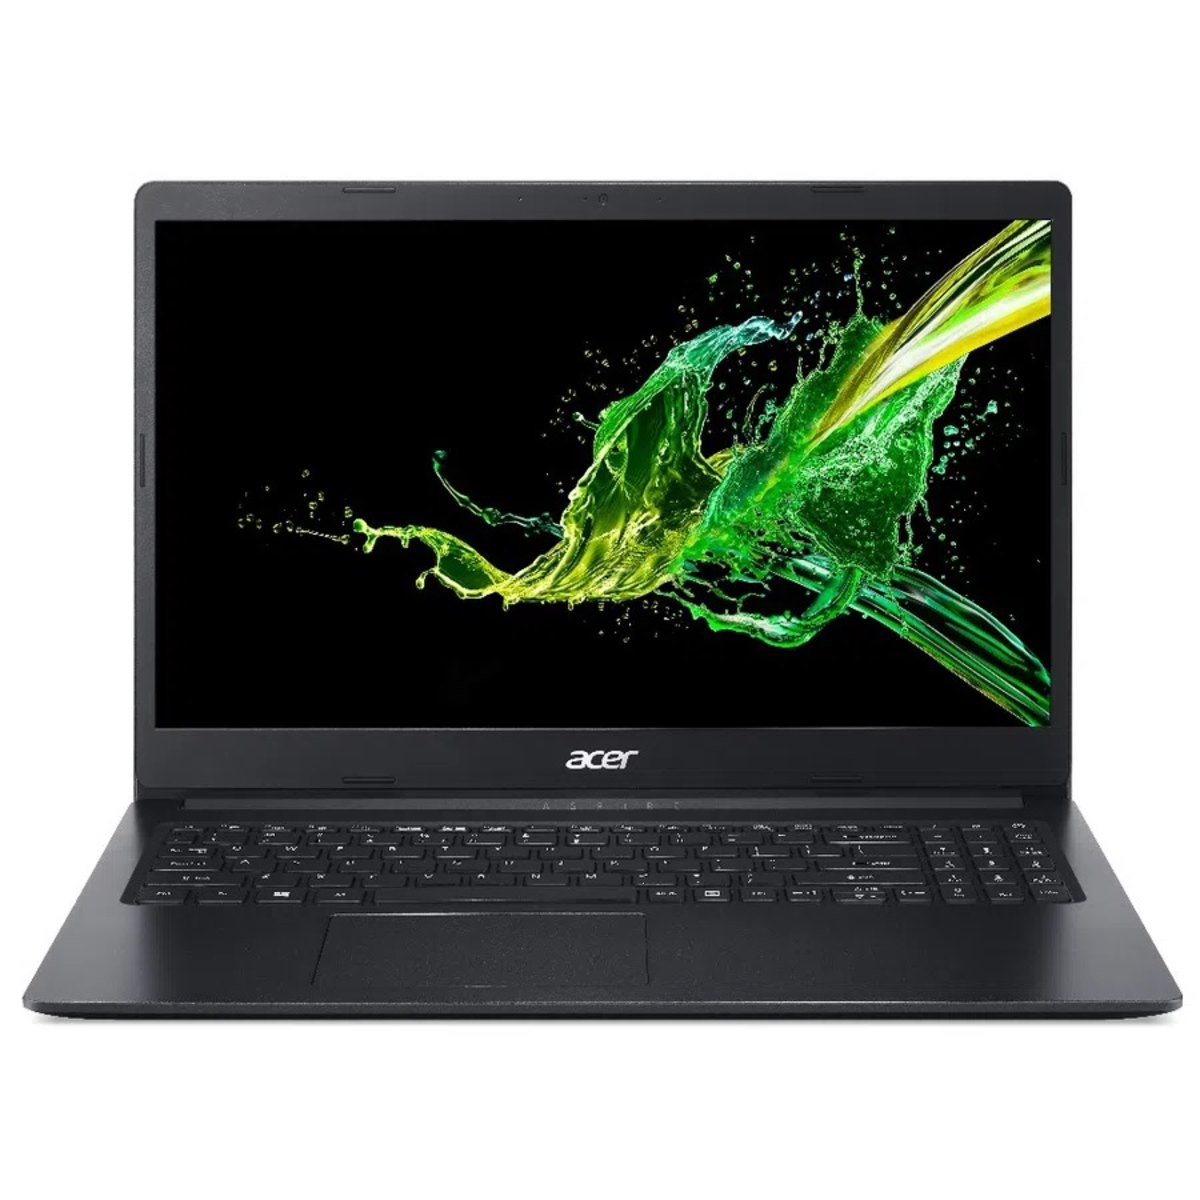 Notebook Acer A315 Core I3 1005g1 Memoria 8gb Hd 1tb Tela Hd 15.6" Windows 10 Home 